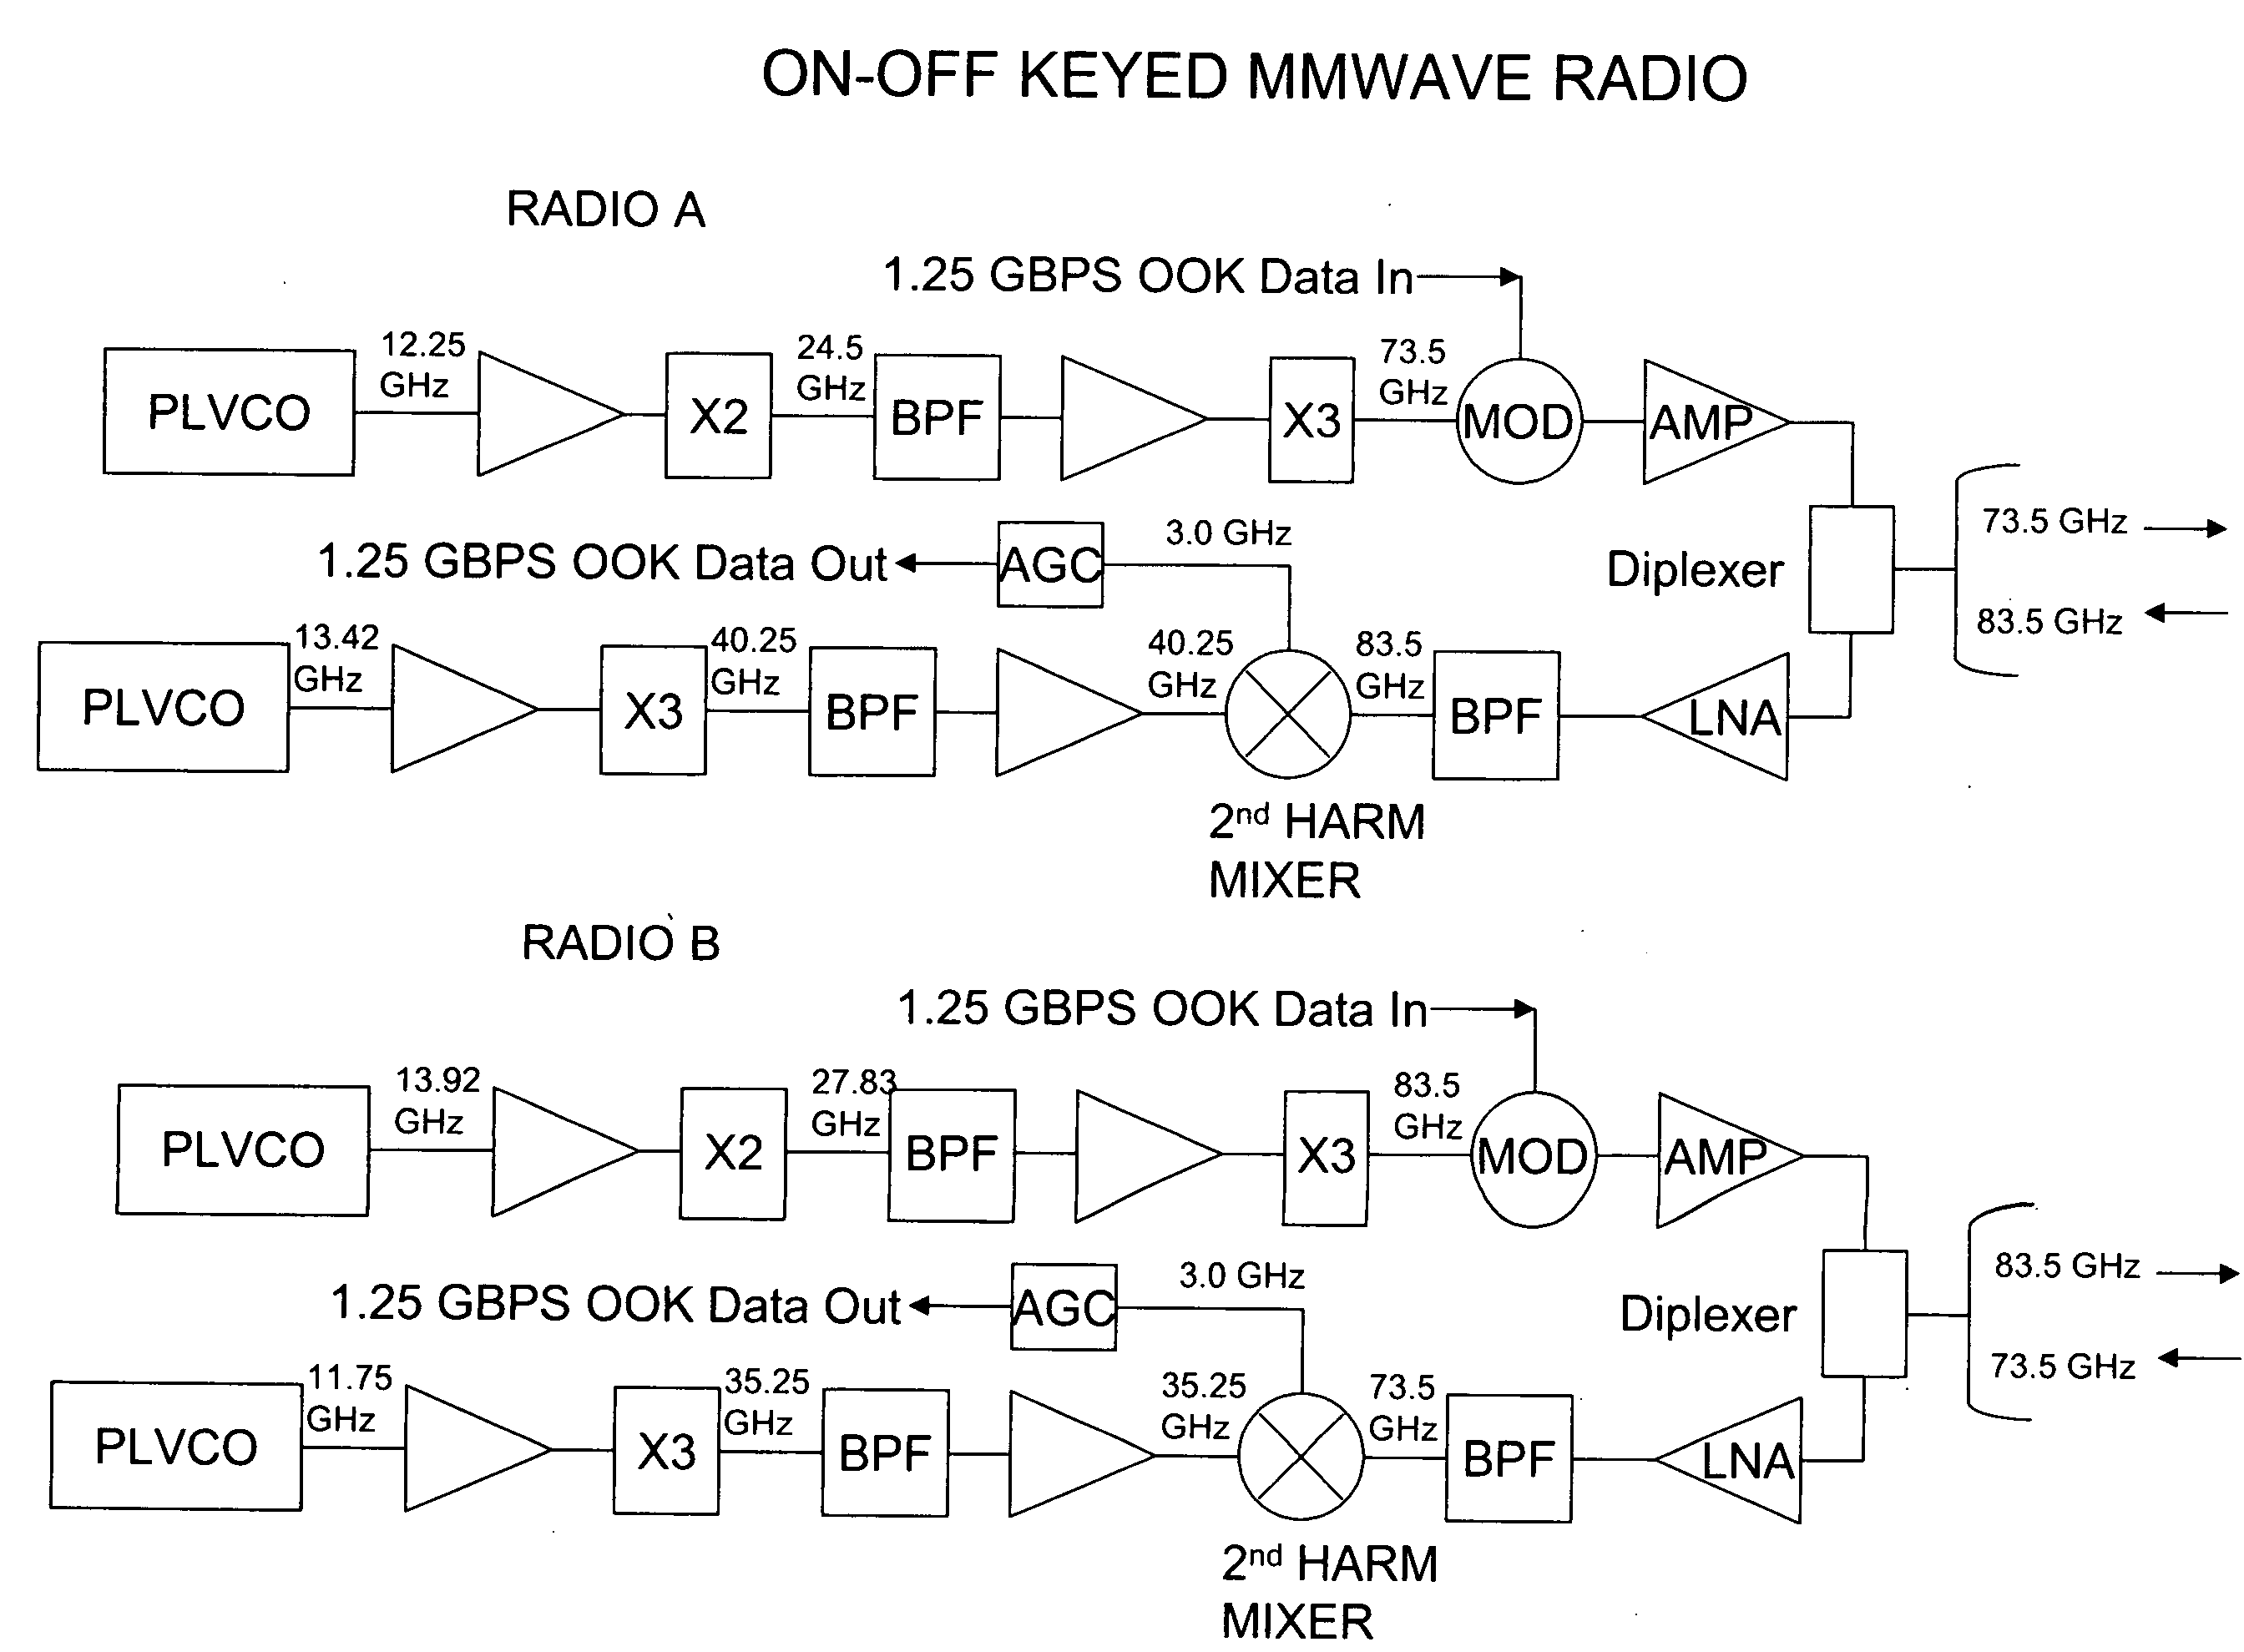 Millimeter wave radio with phase modulation